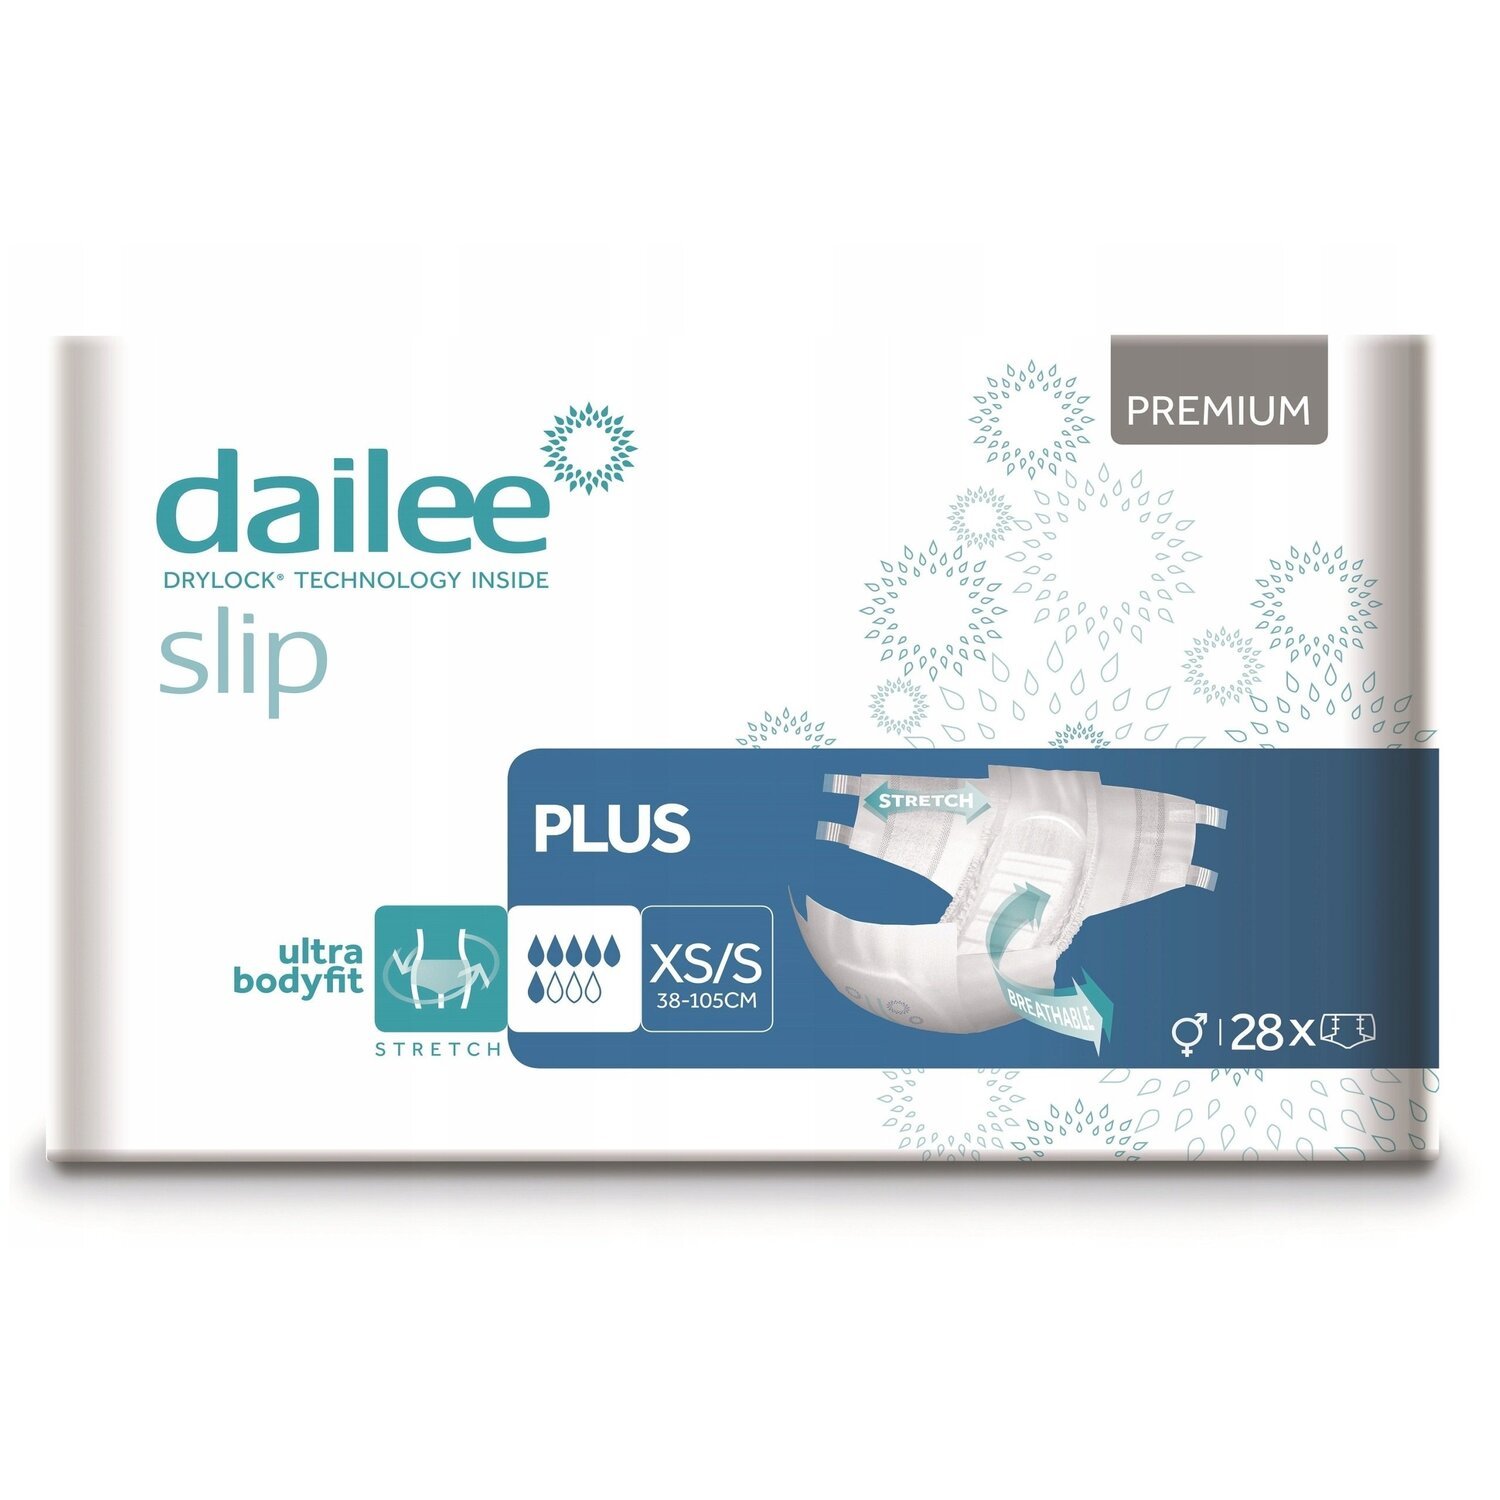 Подгузники для взрослых DAILEE Slip Premium XS/S ,28 шт. фото 